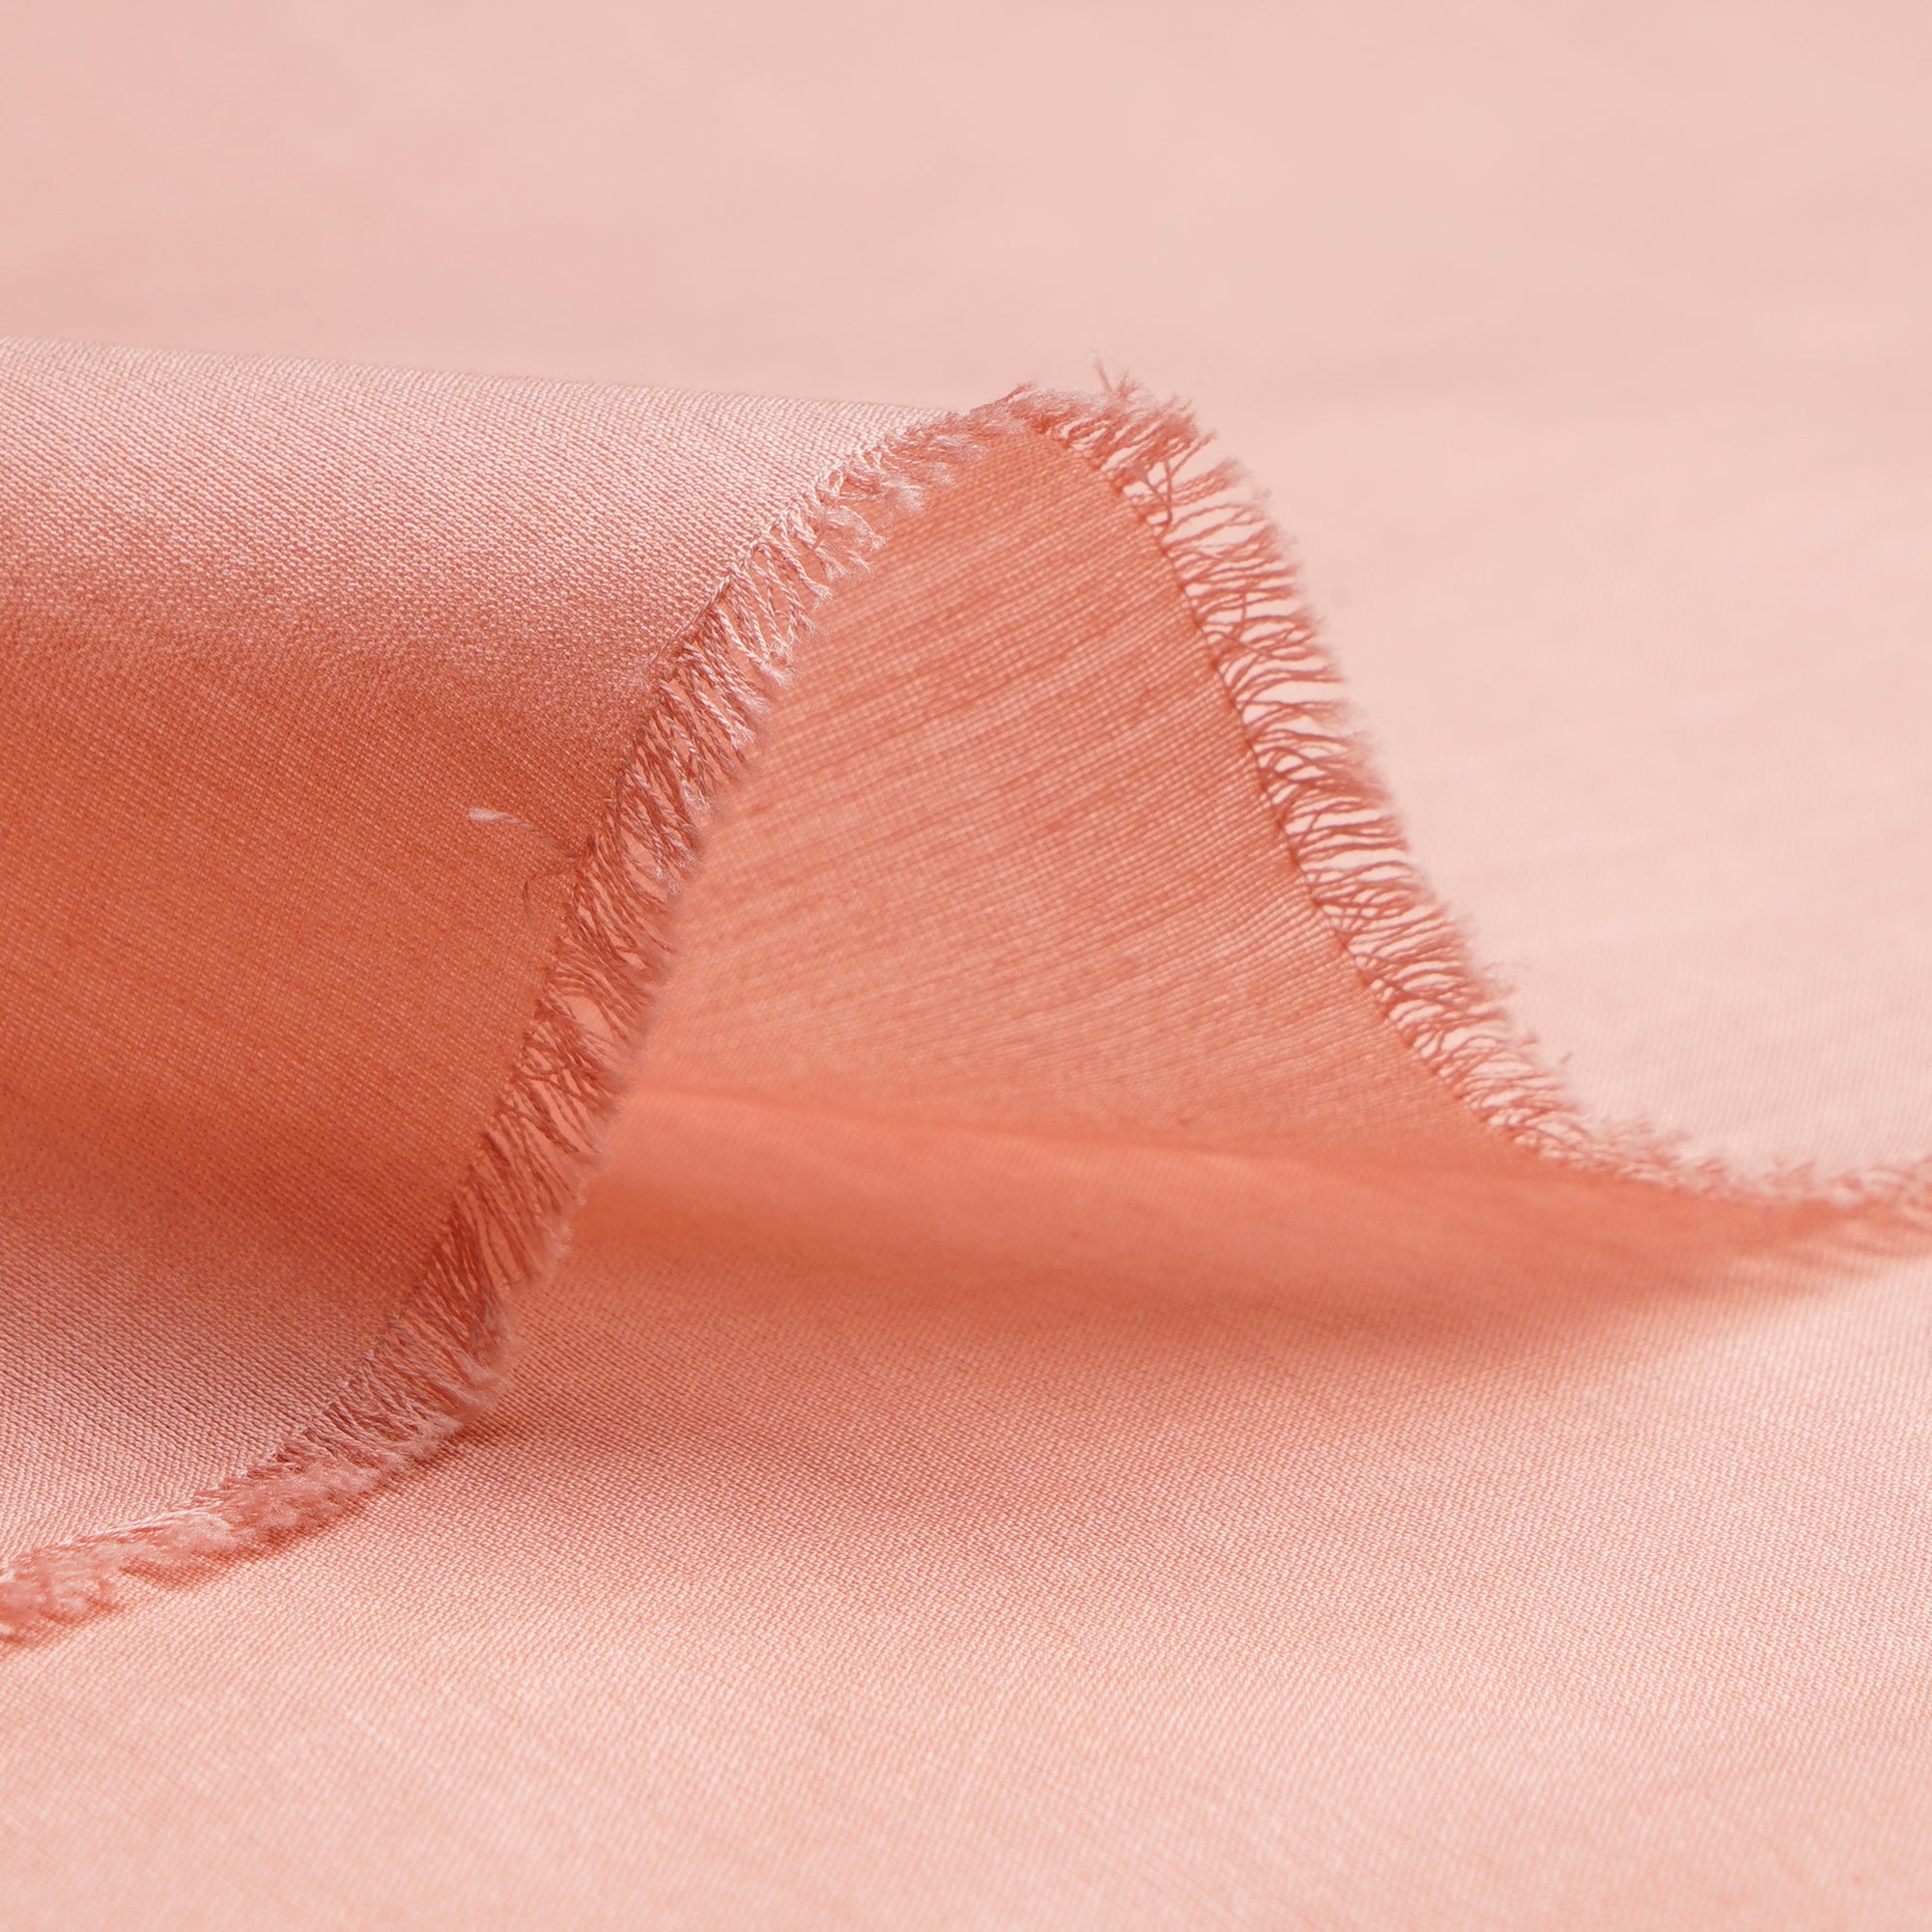 Blush Pink Piece Dyed Rapier Loom Pure Chanderi Fabric